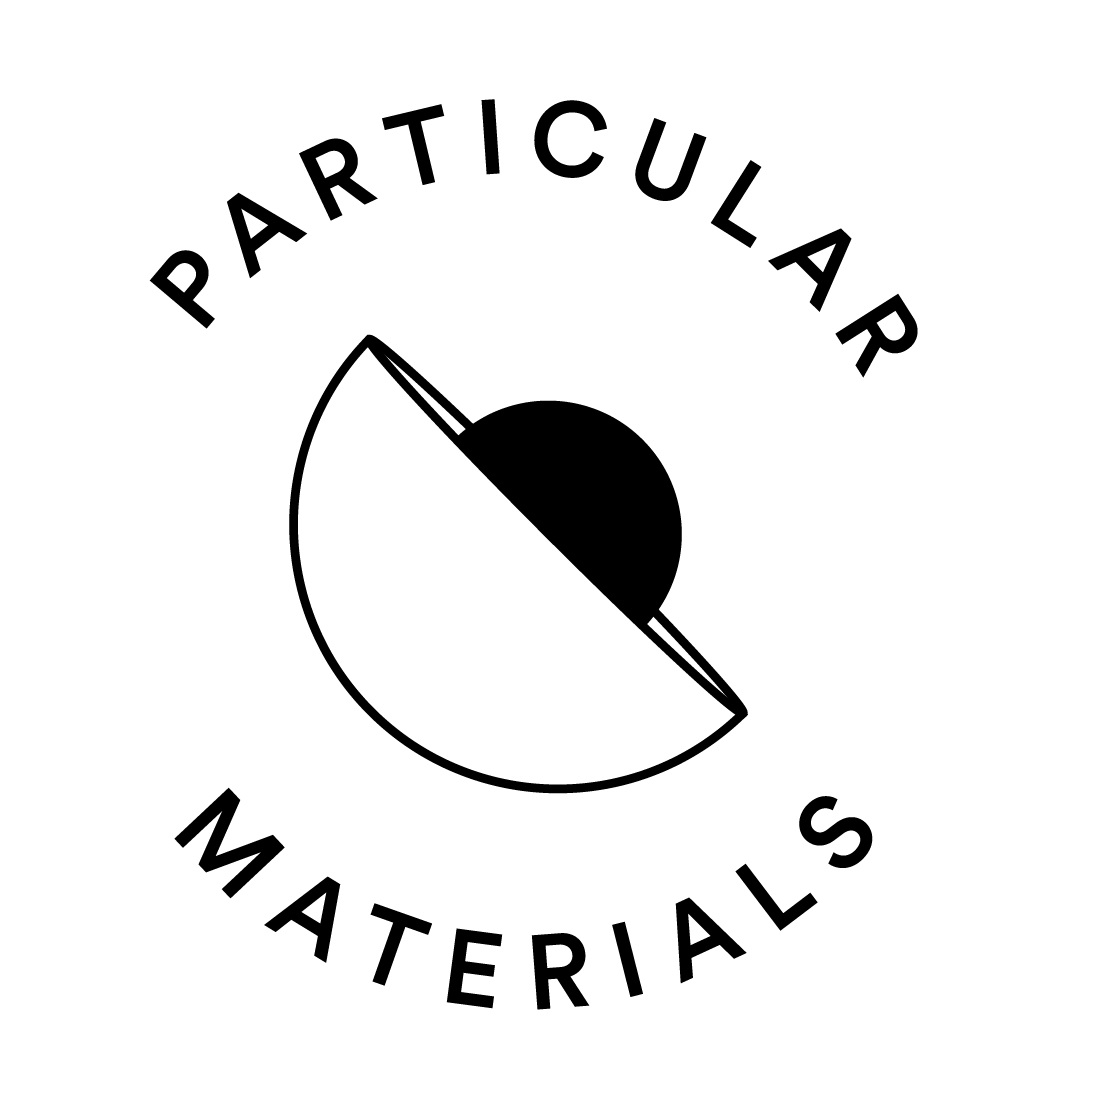 Particular Materials